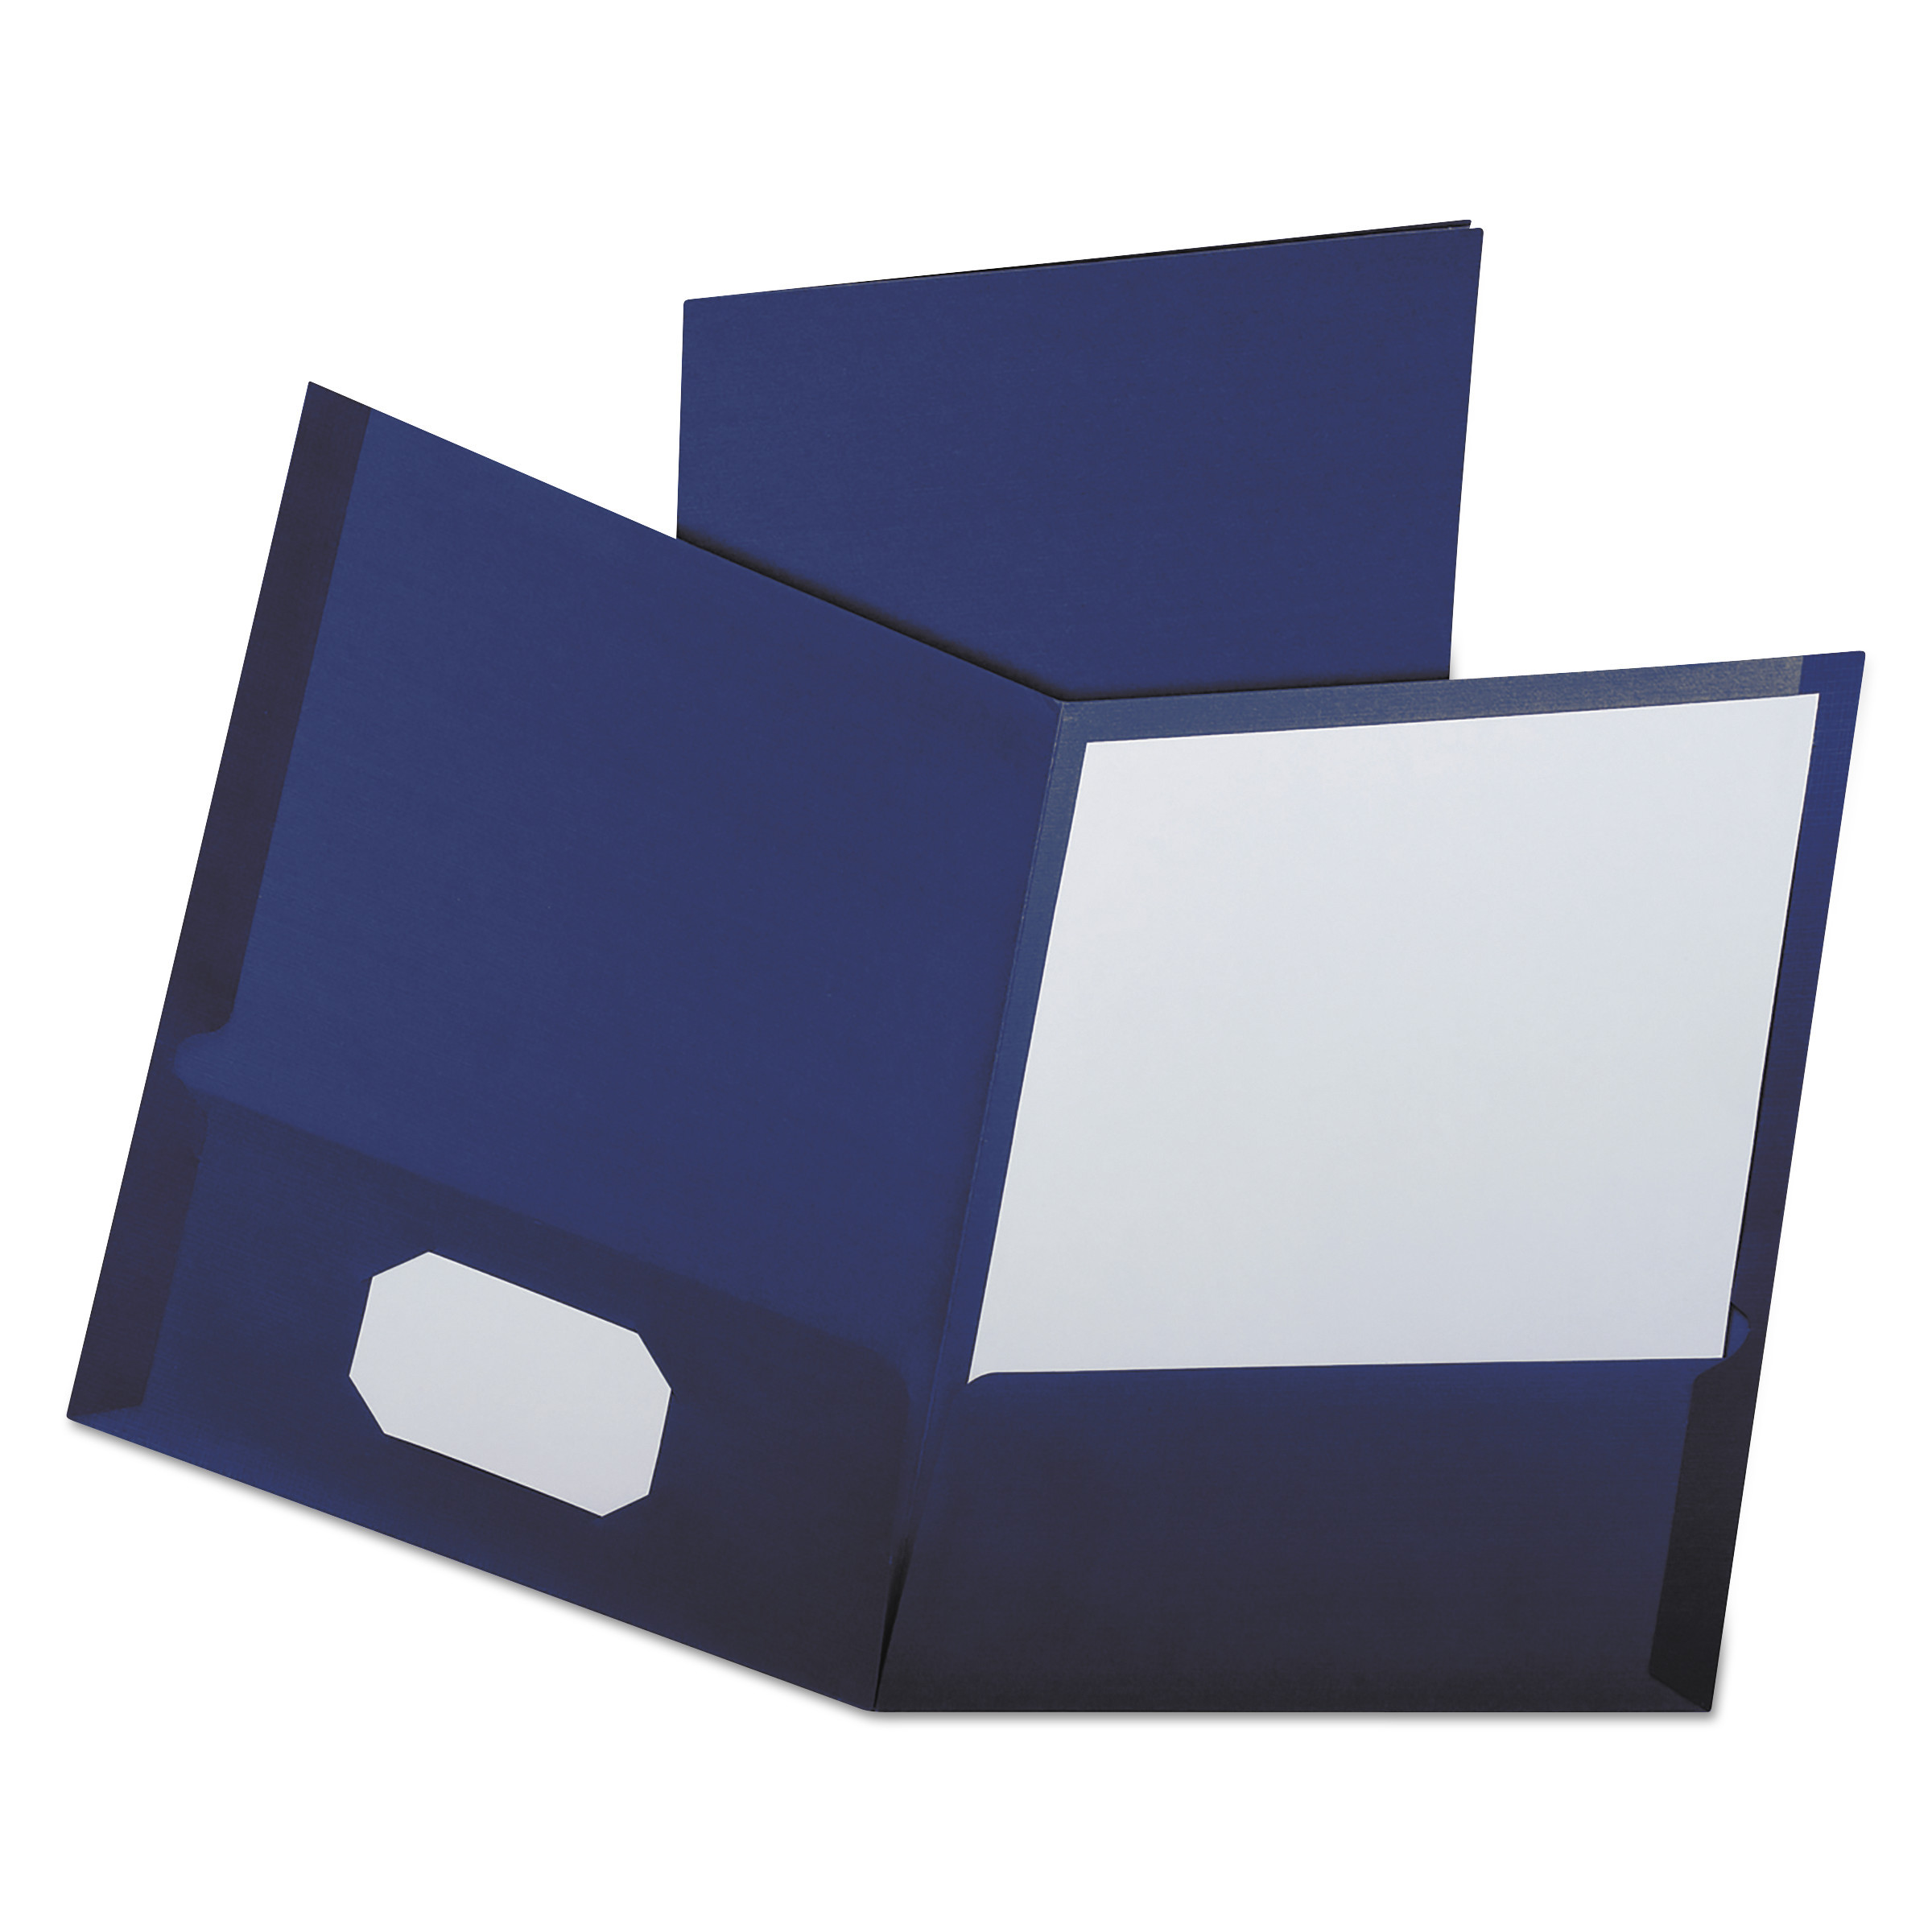 Two-Pocket Folder, Textured Paper, 100-Sheet Capacity, 11 x 8.5, Green,  25/Box